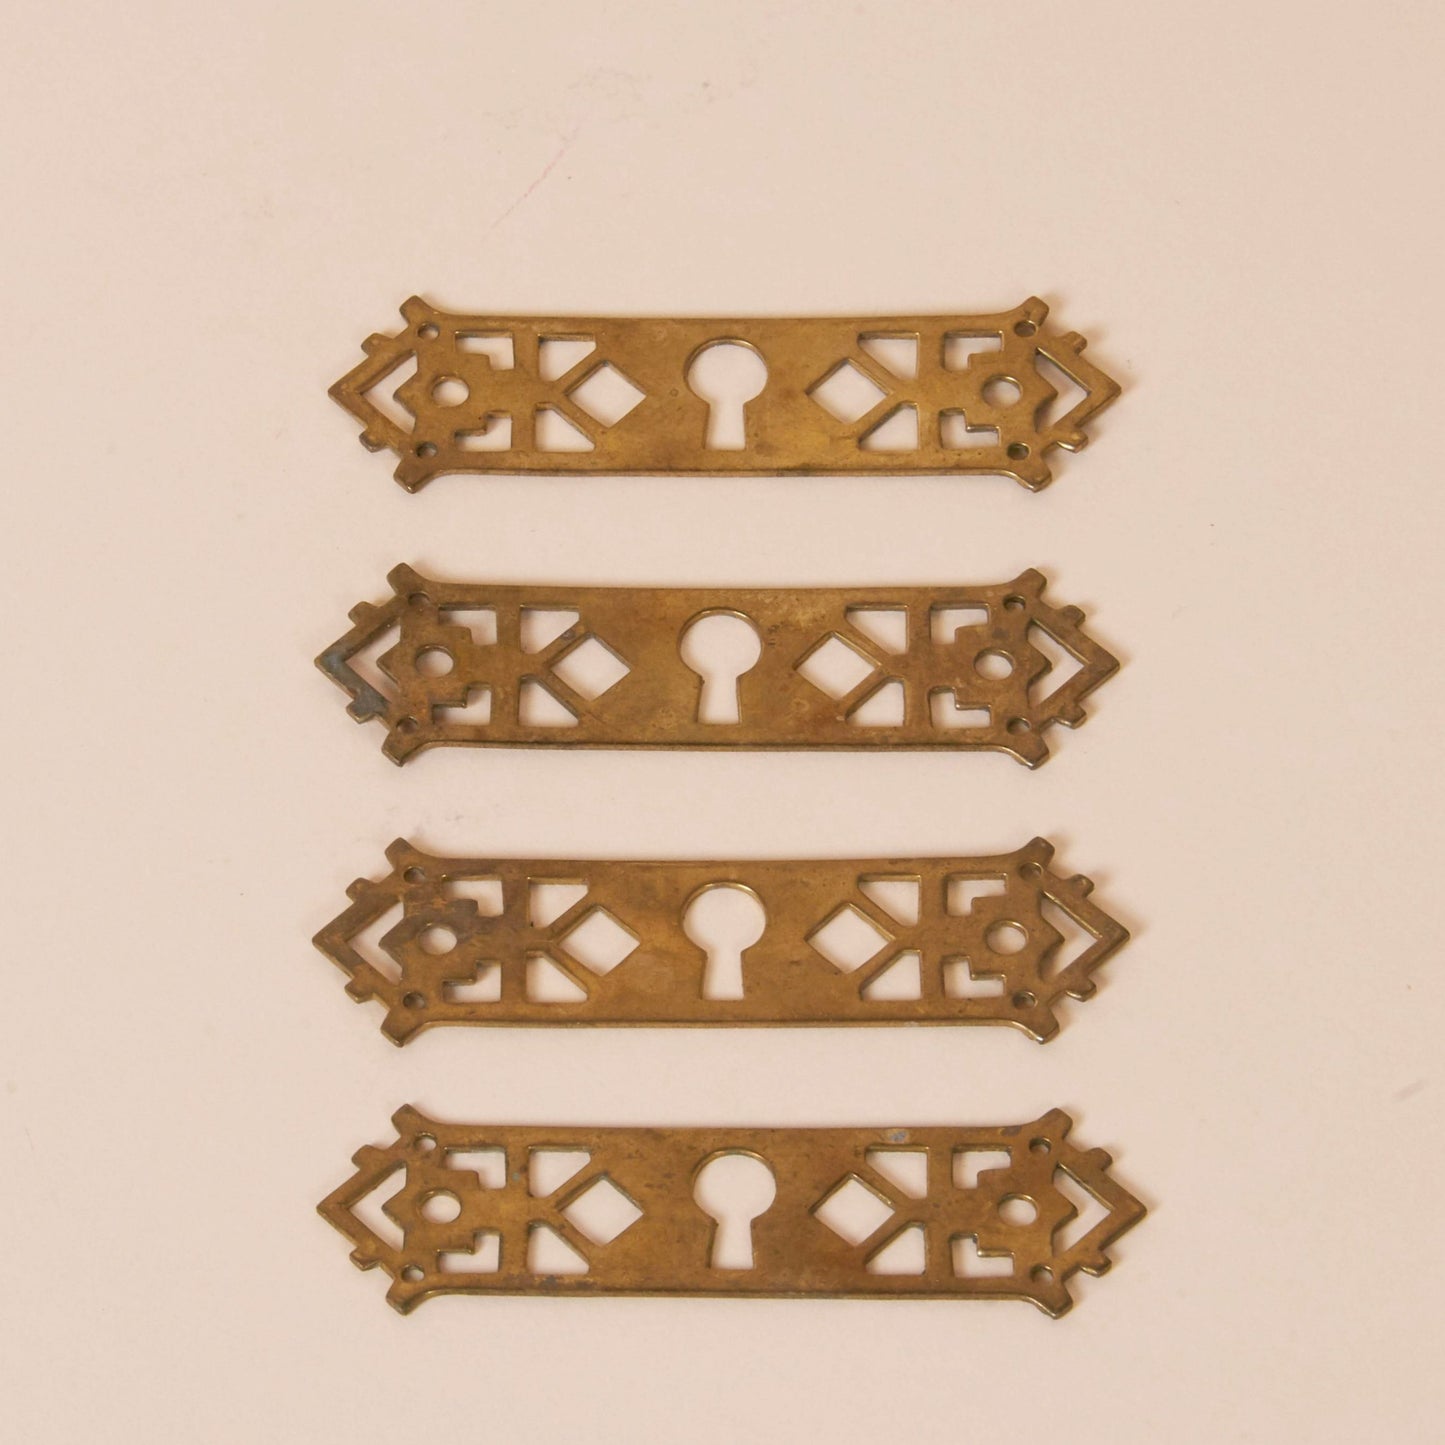 The Pimp Kira - Gothic Style Antique Escutcheon Plates